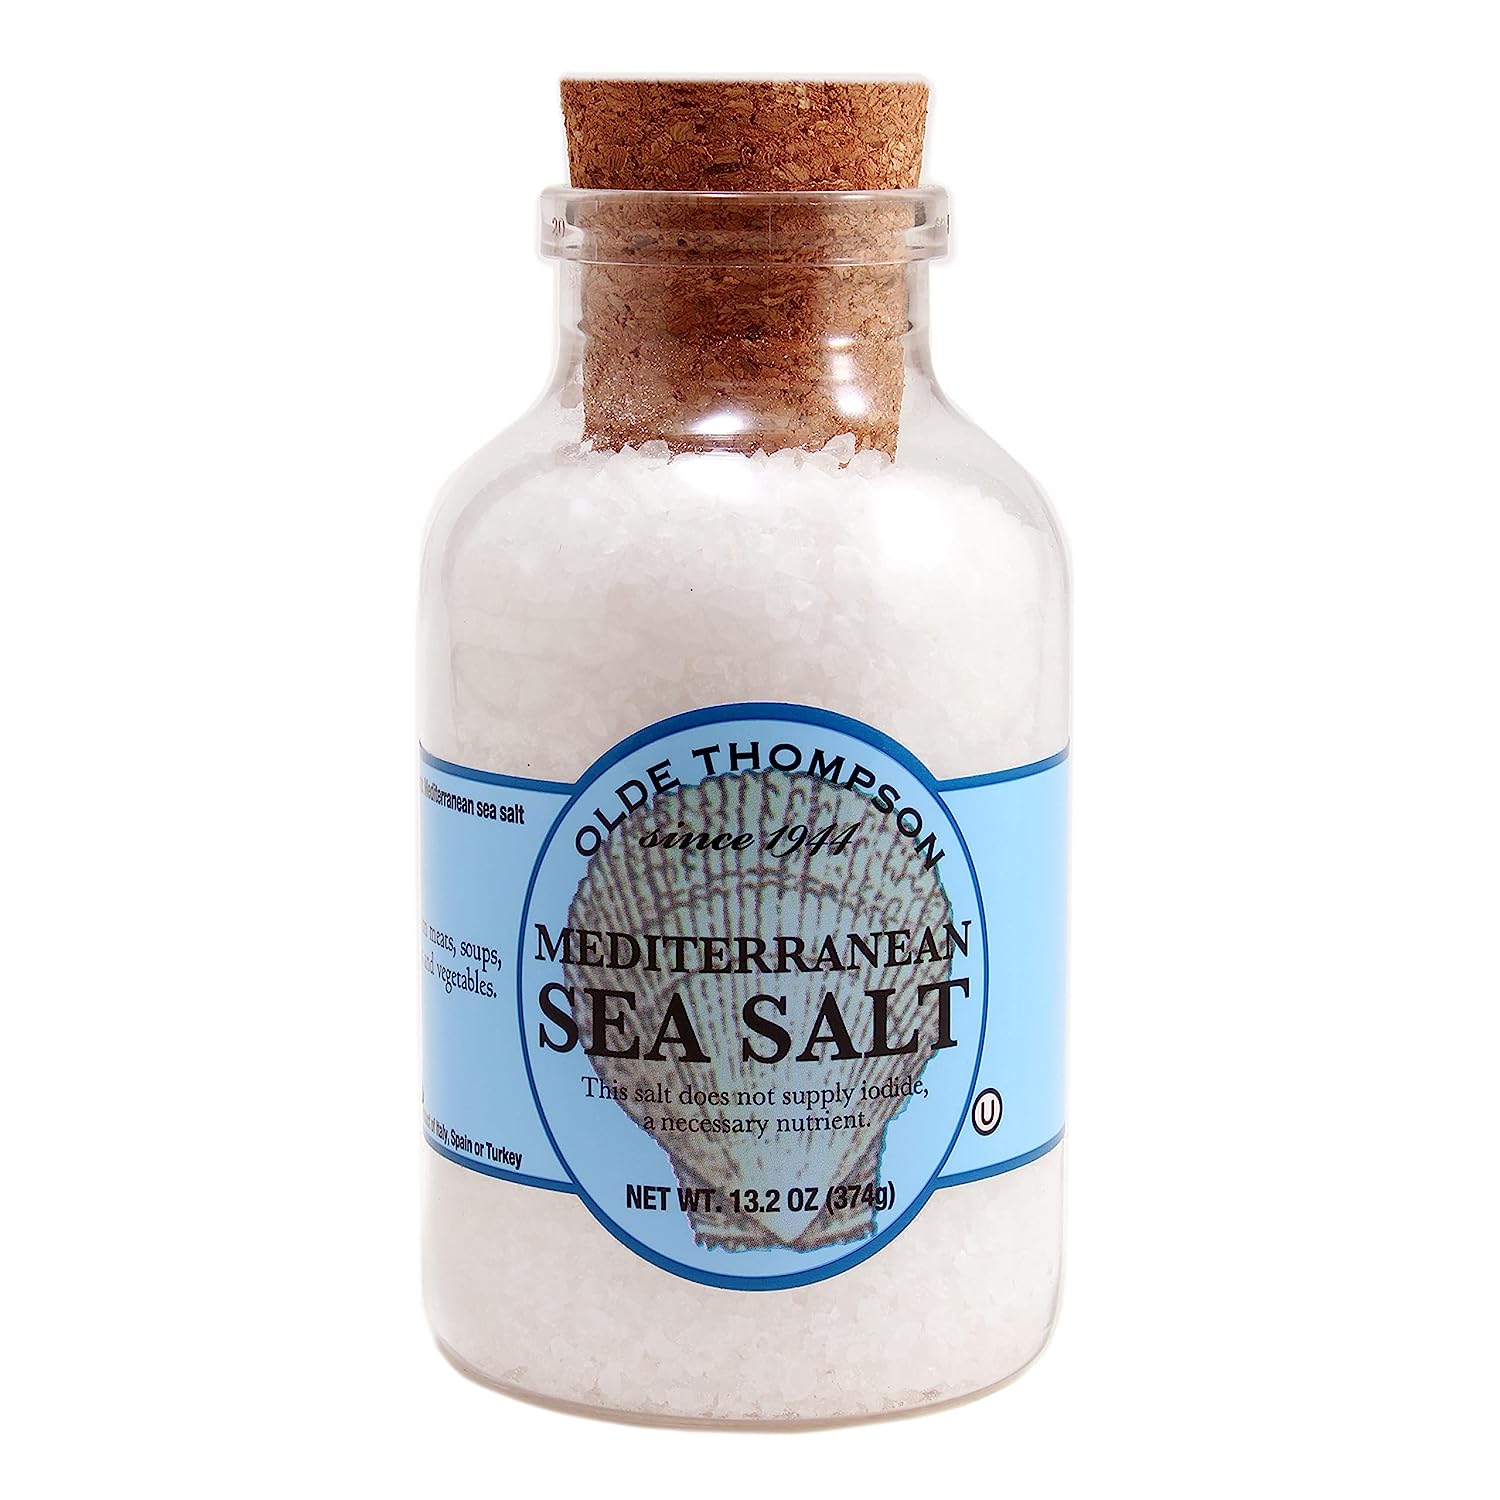 sea salt product review